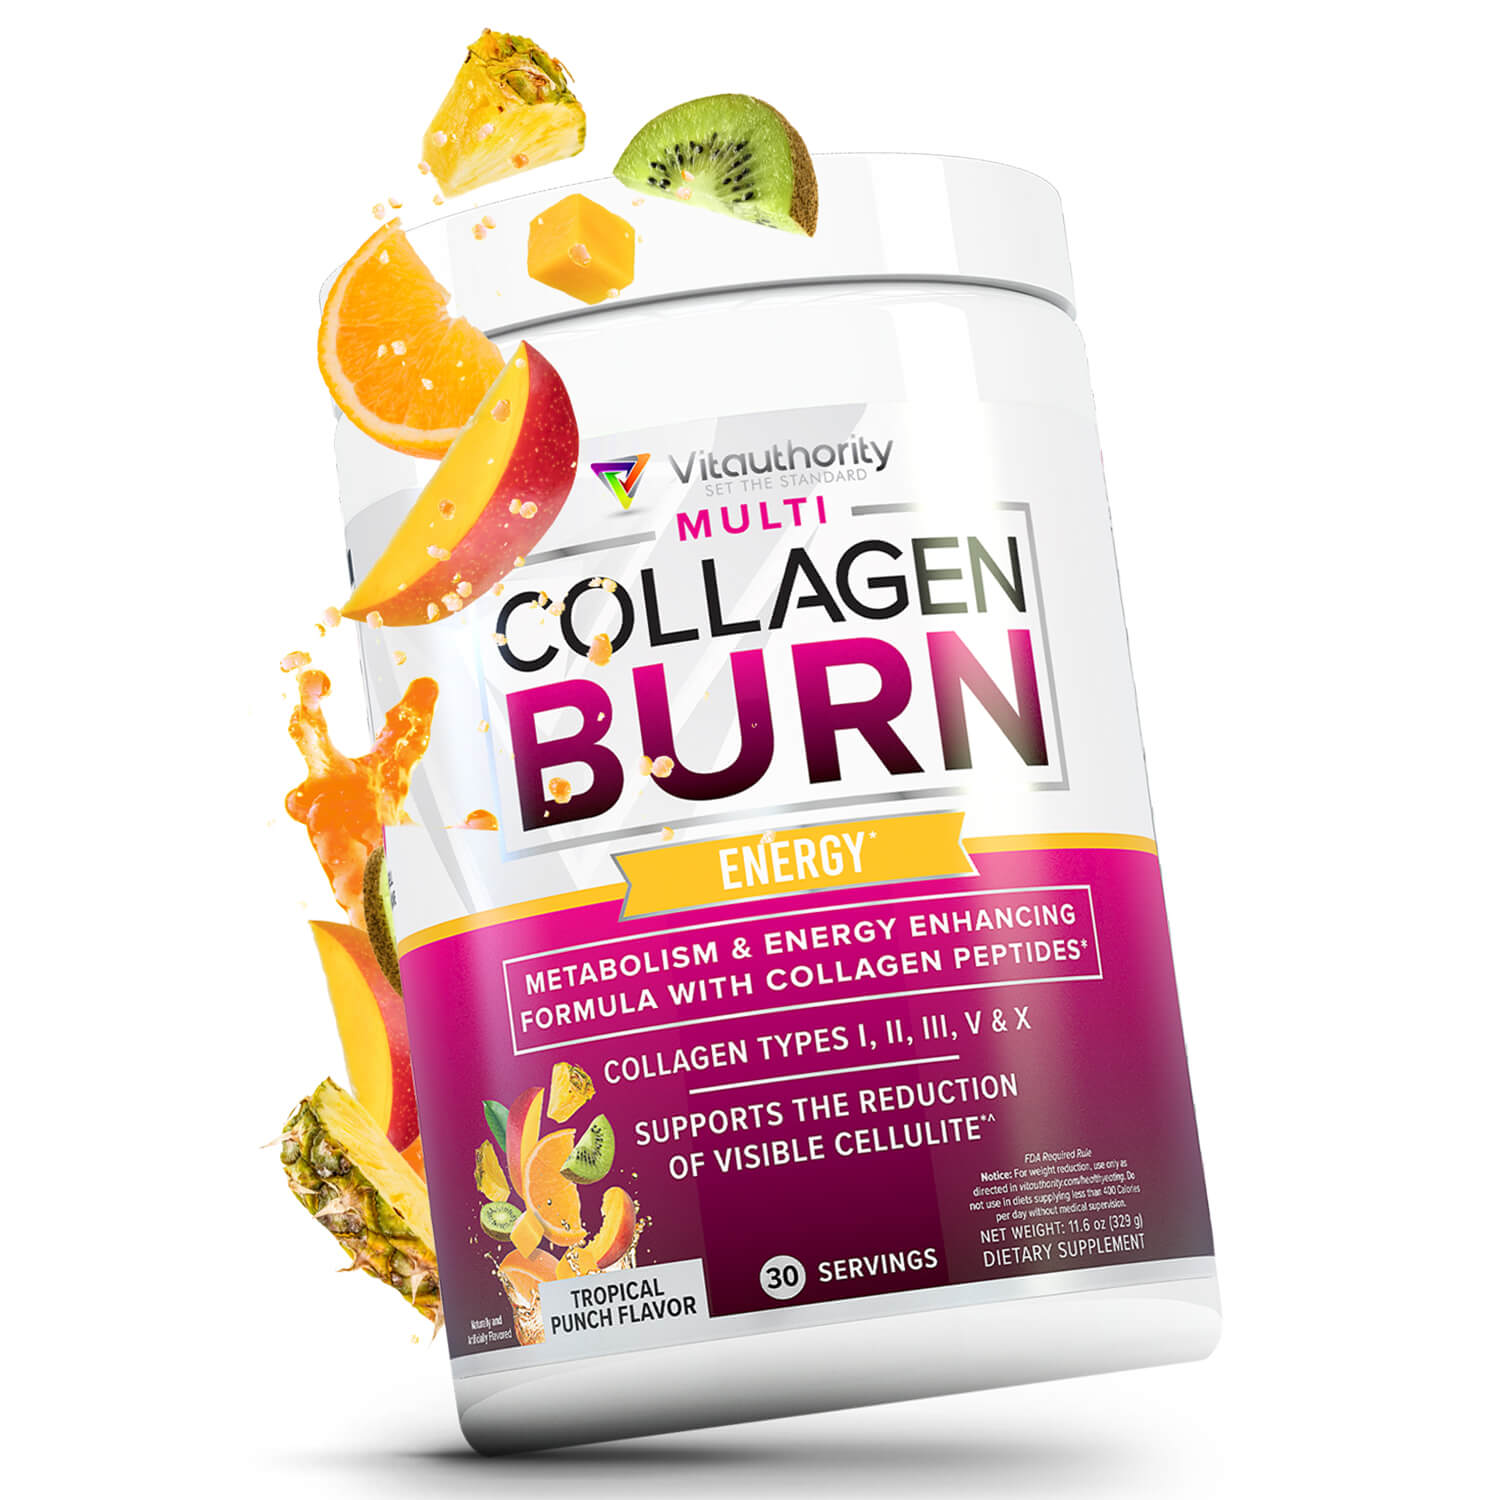 Multi Collagen Burn ENERGY | Skin Firming 5-Type Multi Collagen 